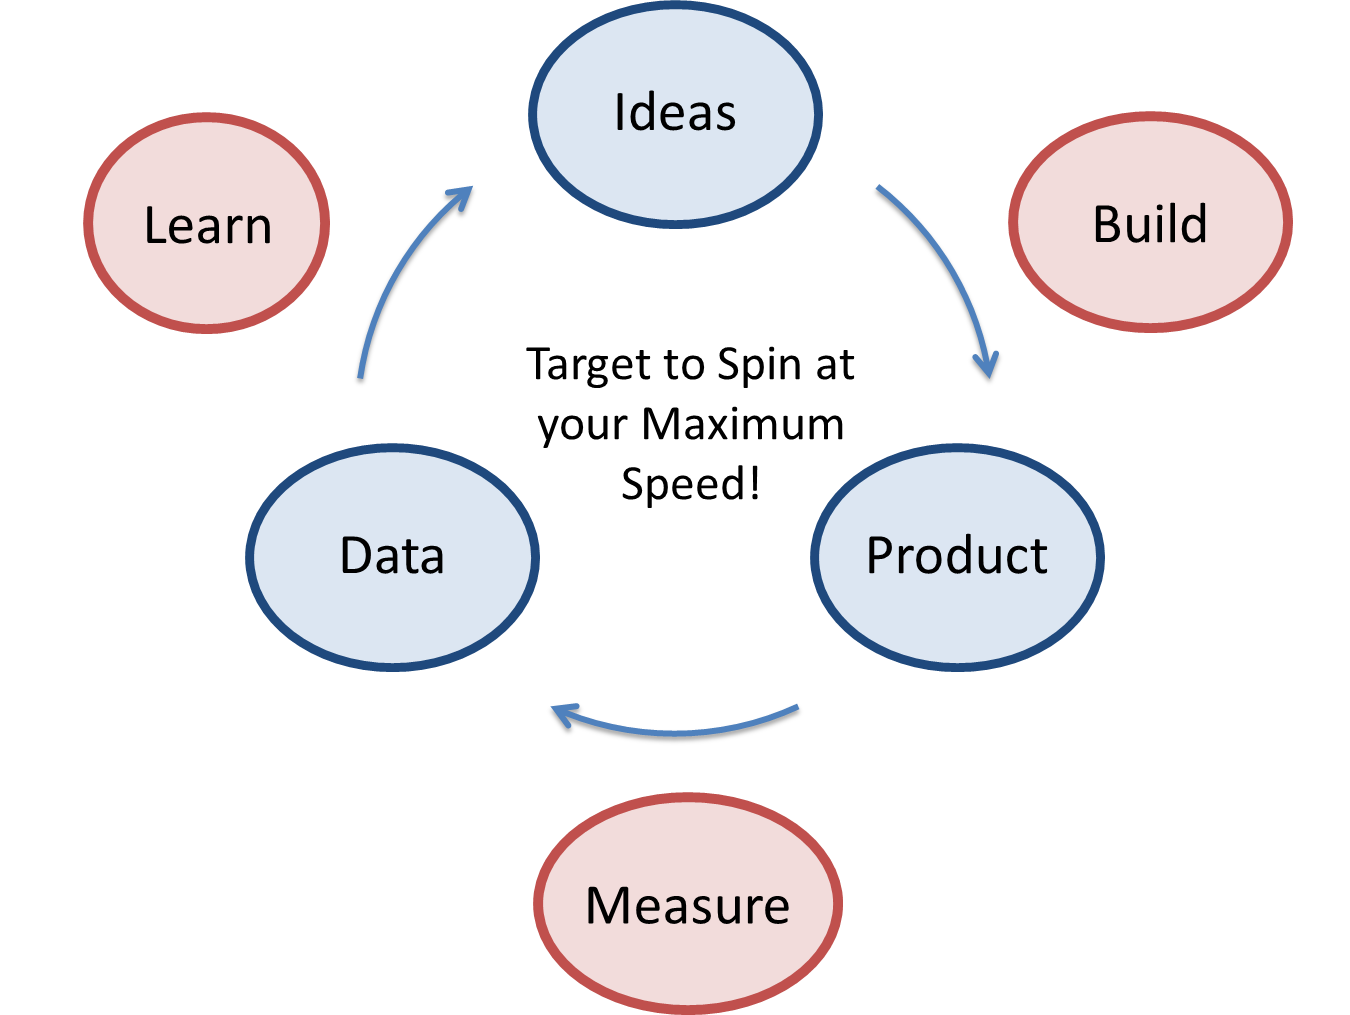 Lean Startup Diagram